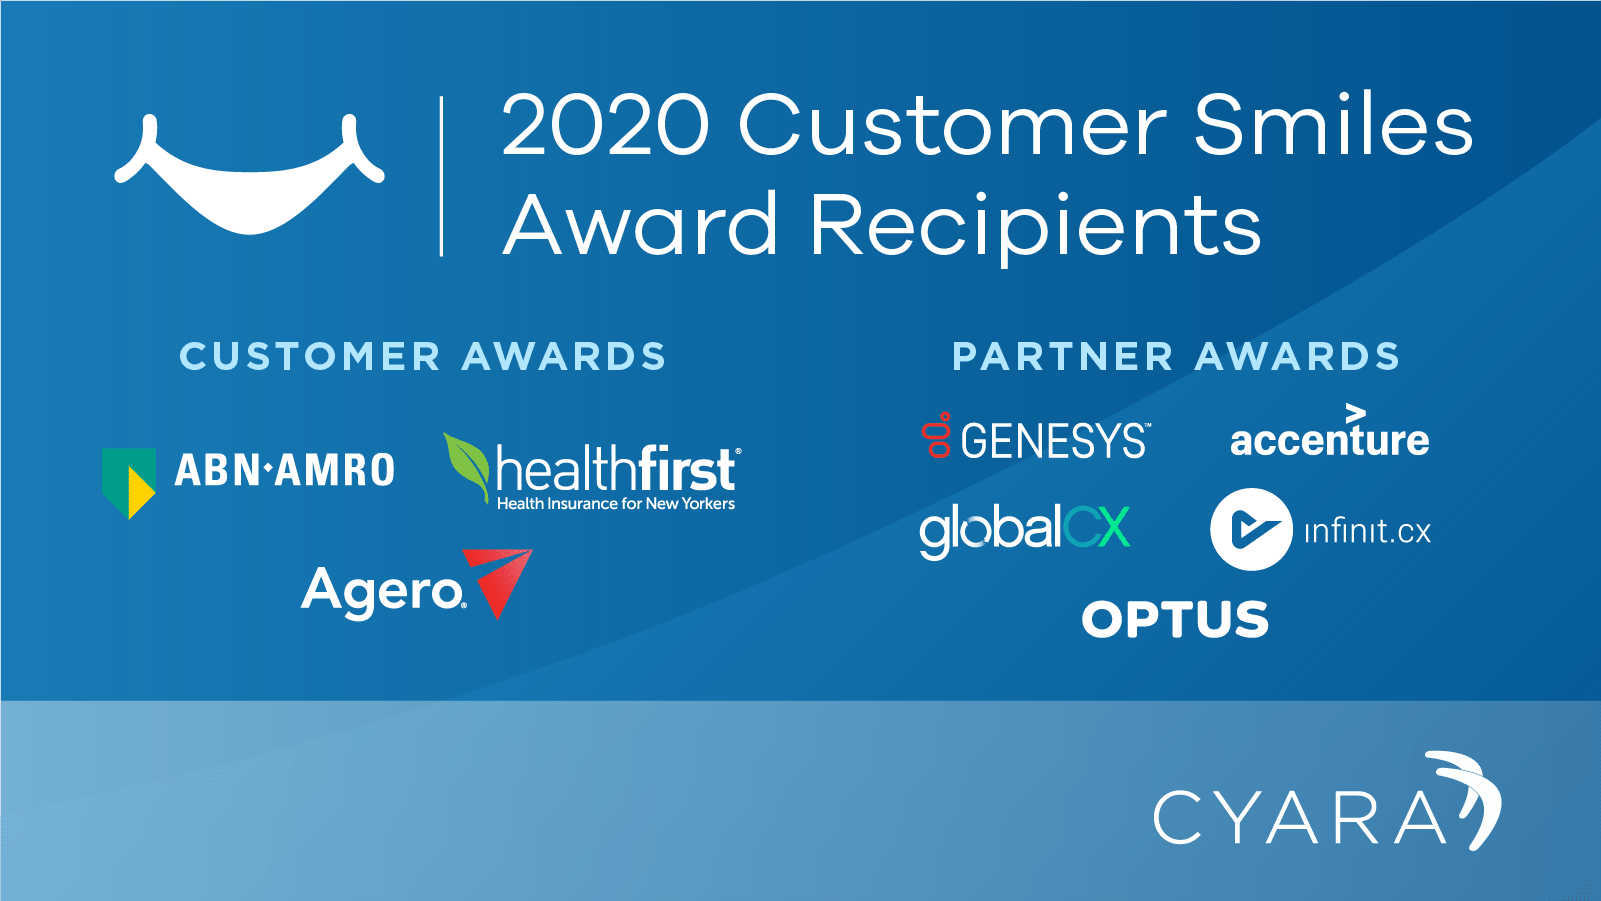 Cyara 2020 Customer Smiles award recipients